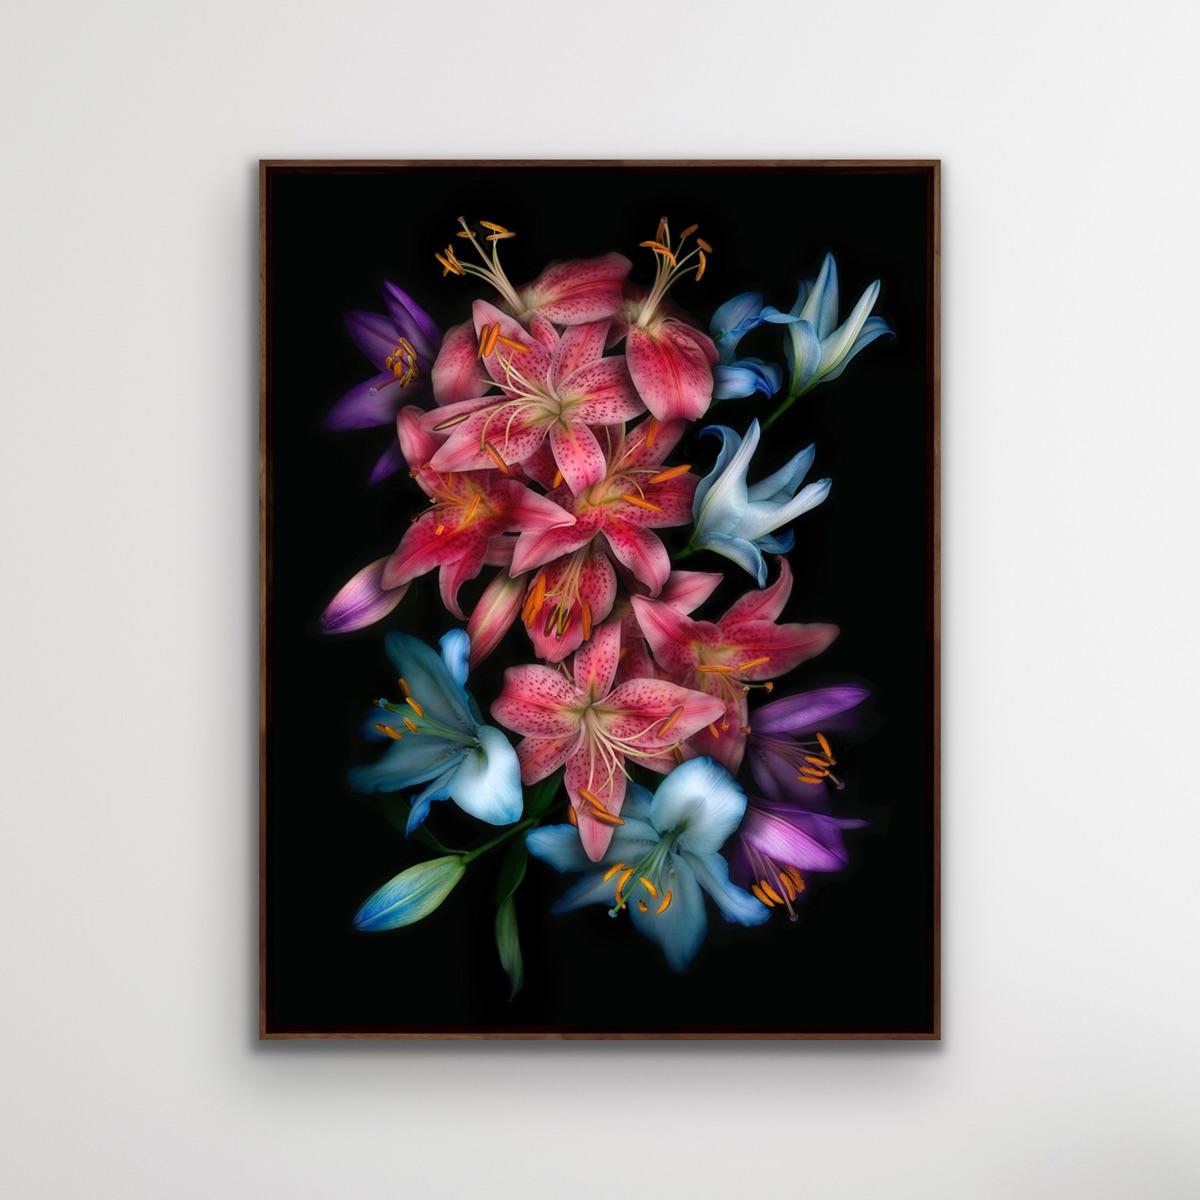 FLORA ODYSSEY N°5, Allan Forsyth, Limited edition print, Floral art For Sale 2